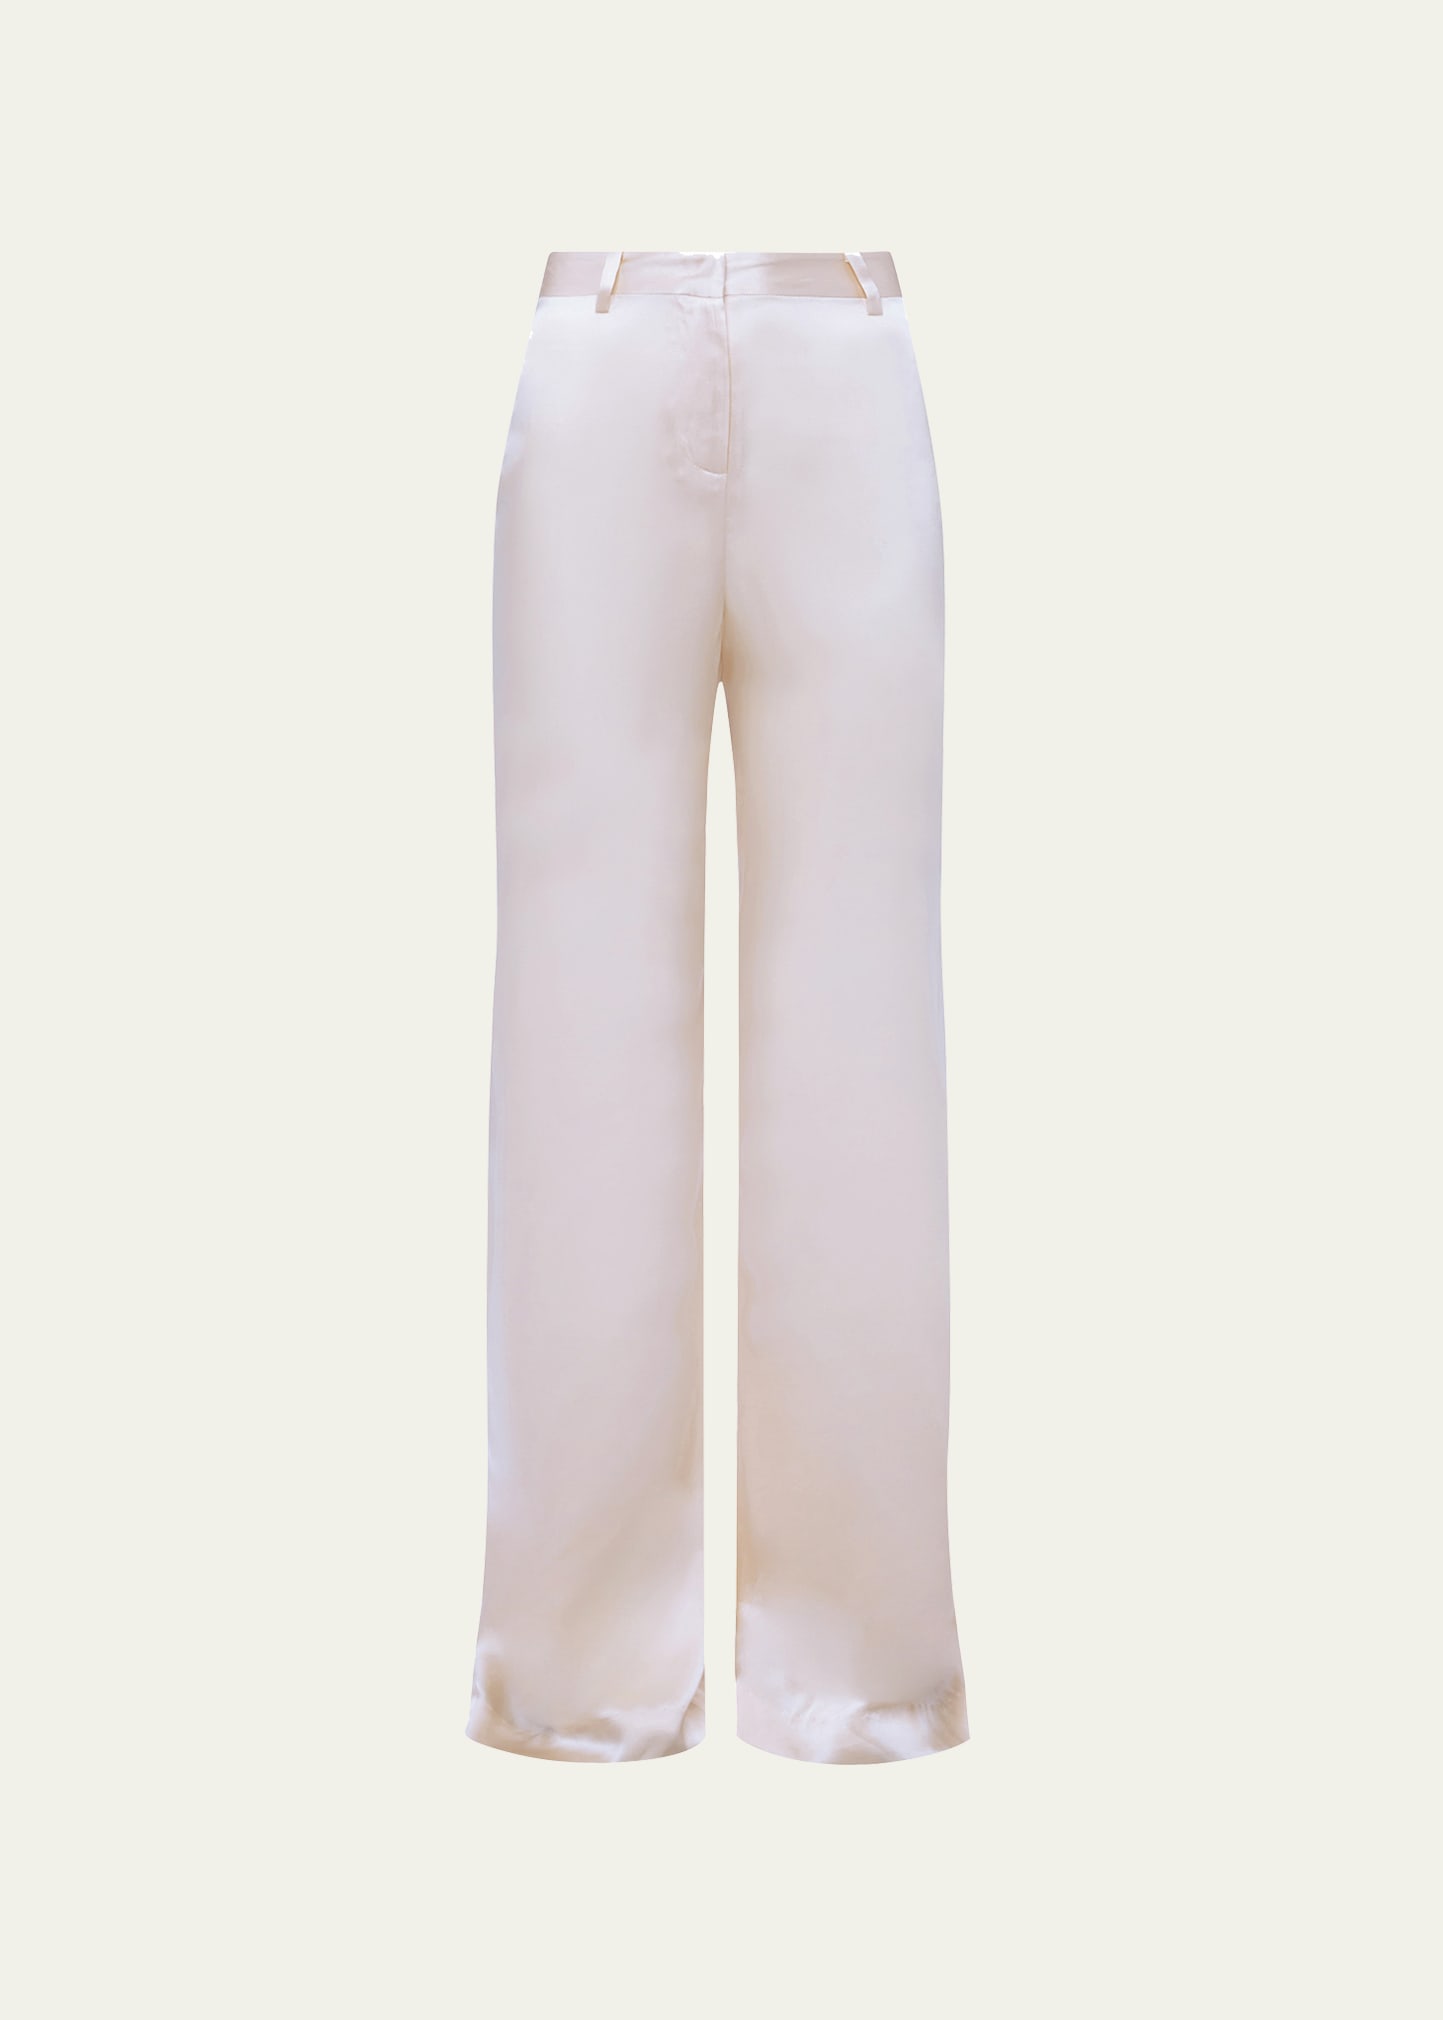 Buy White Satin Pants, Wide Leg Long Pants for Women, Silk High